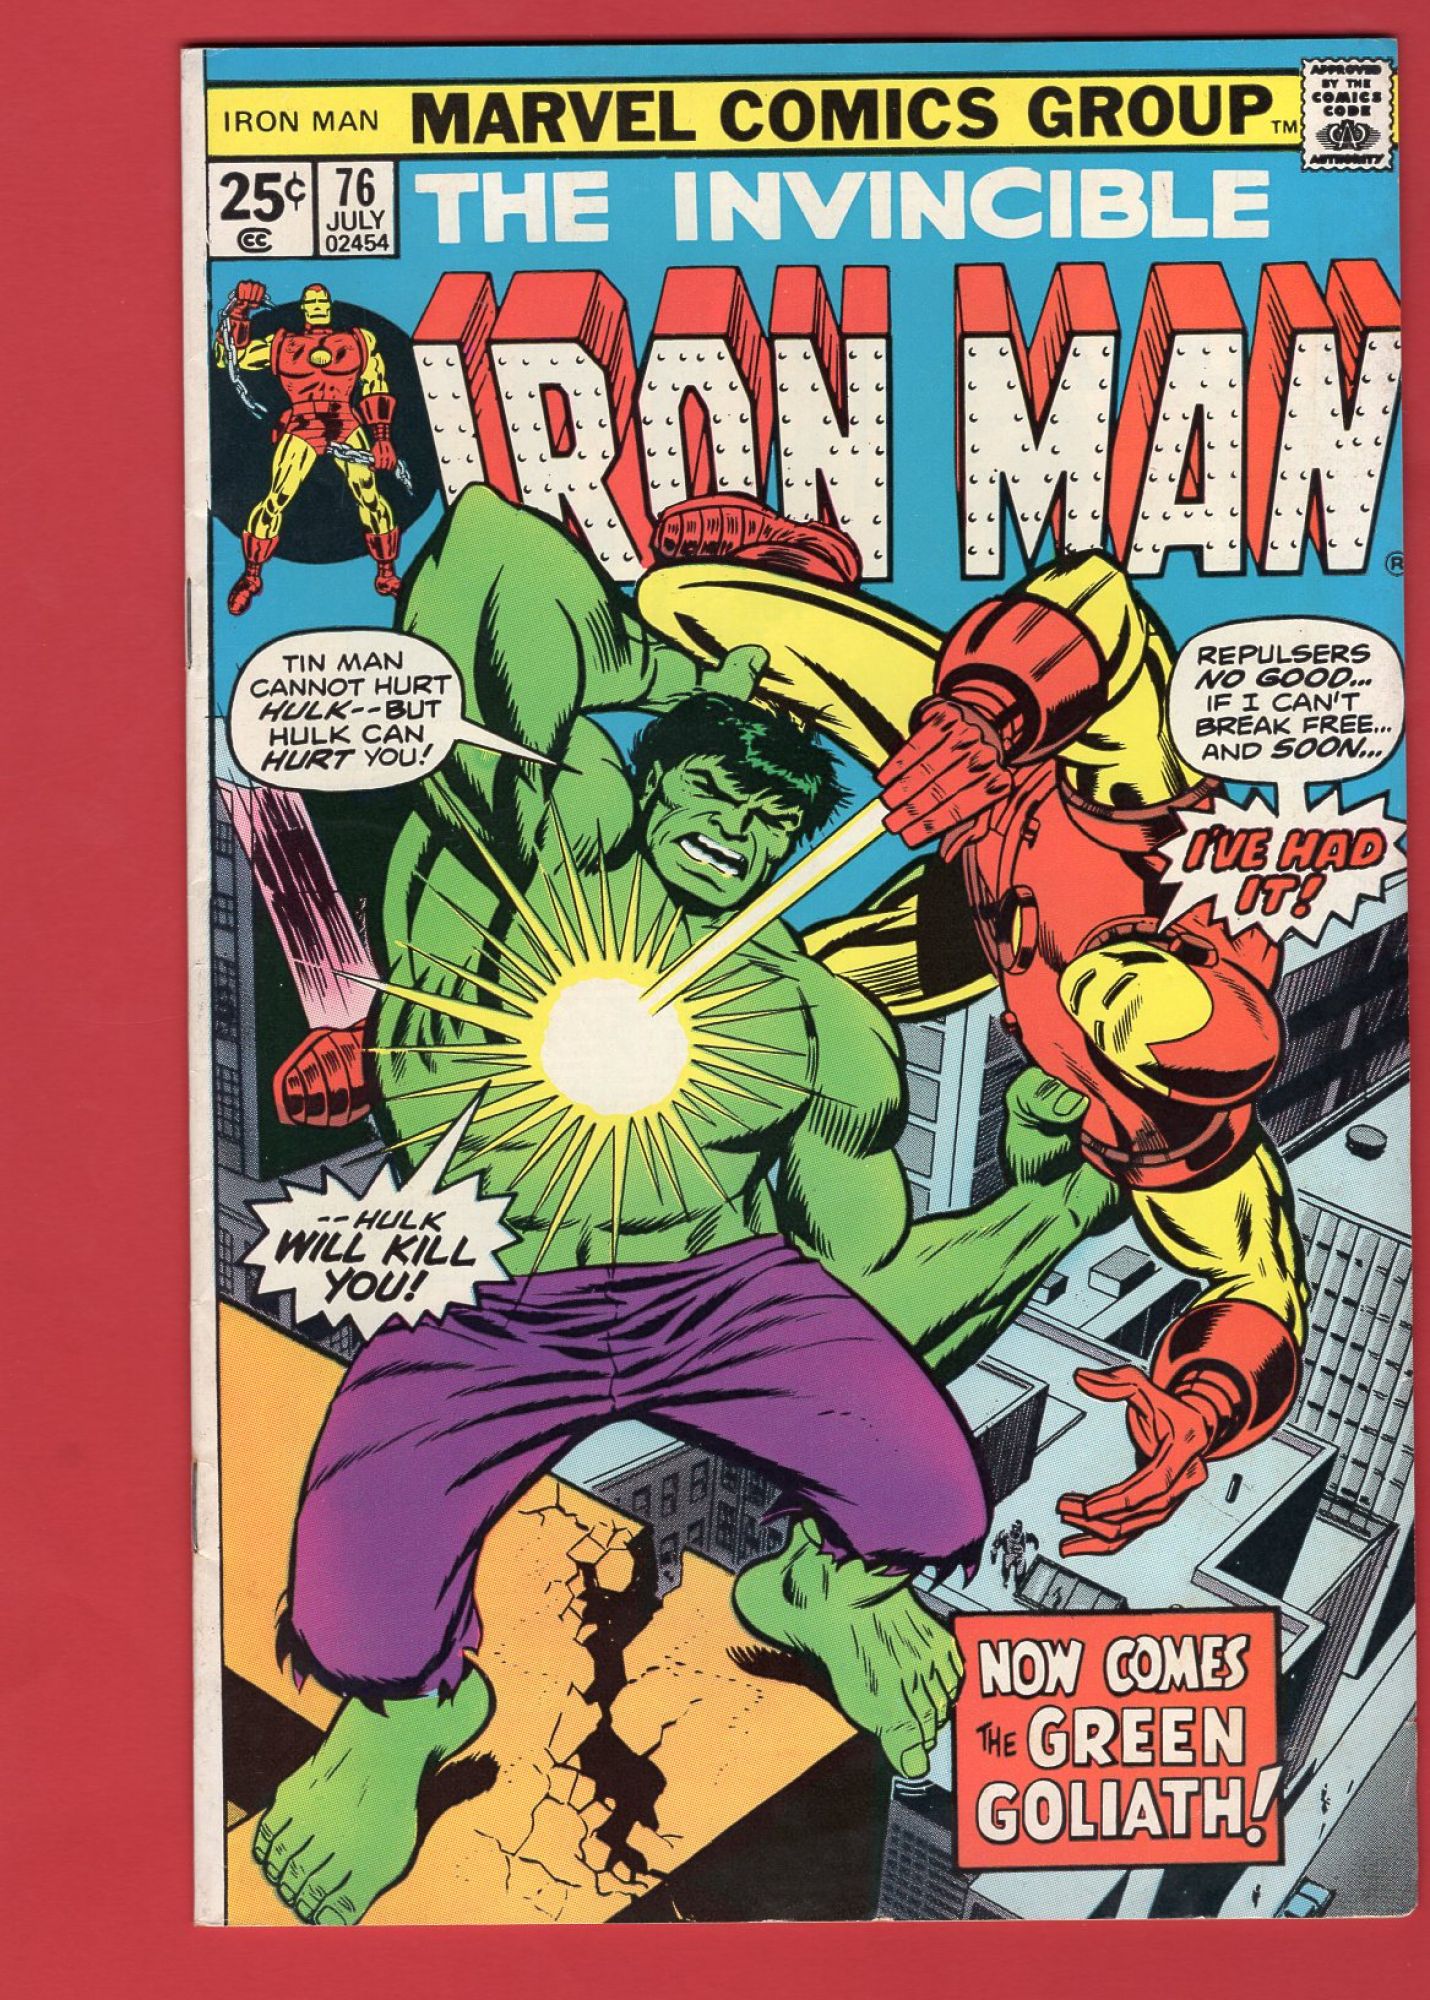 Iron Man #76, Jul 1975, 7.0 FN/VF